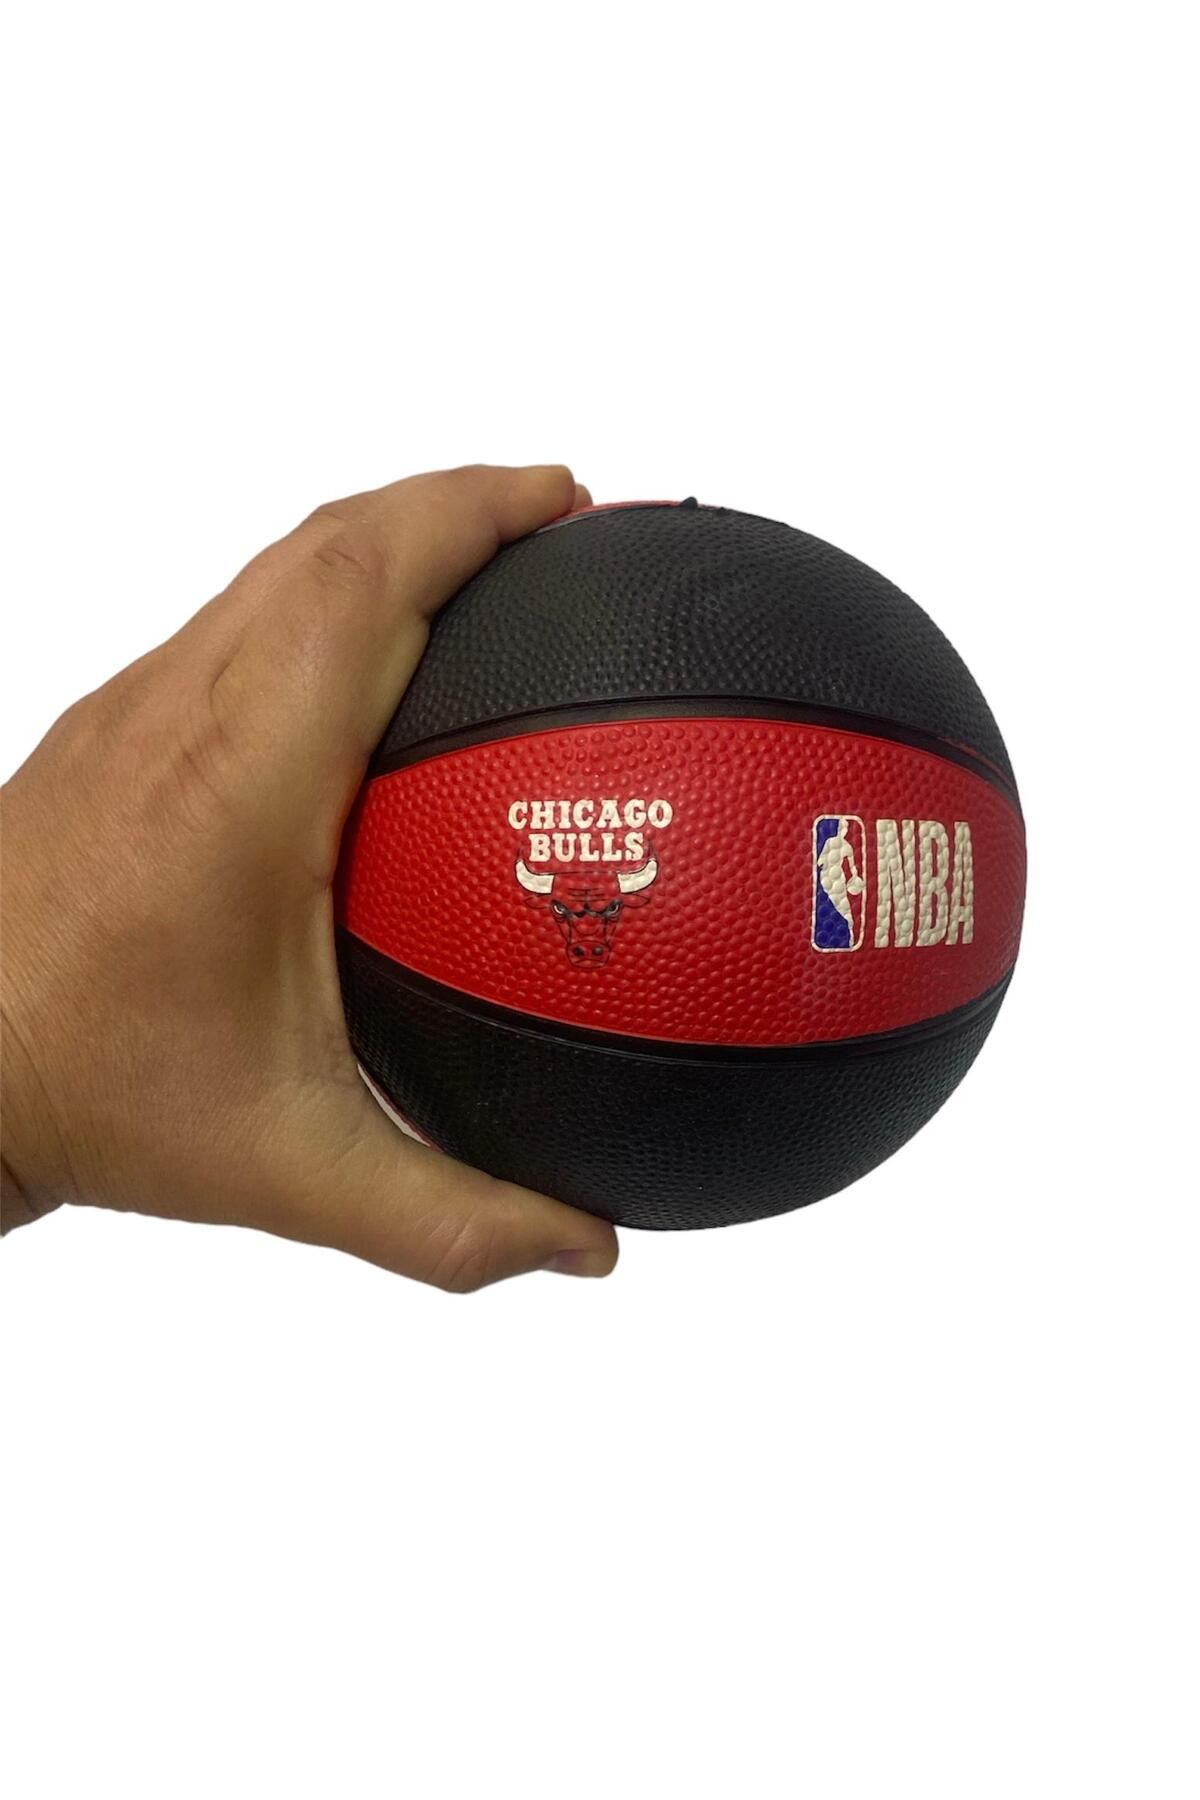 NBA Çocuk Mini Basketbol Topu - 1 Numara